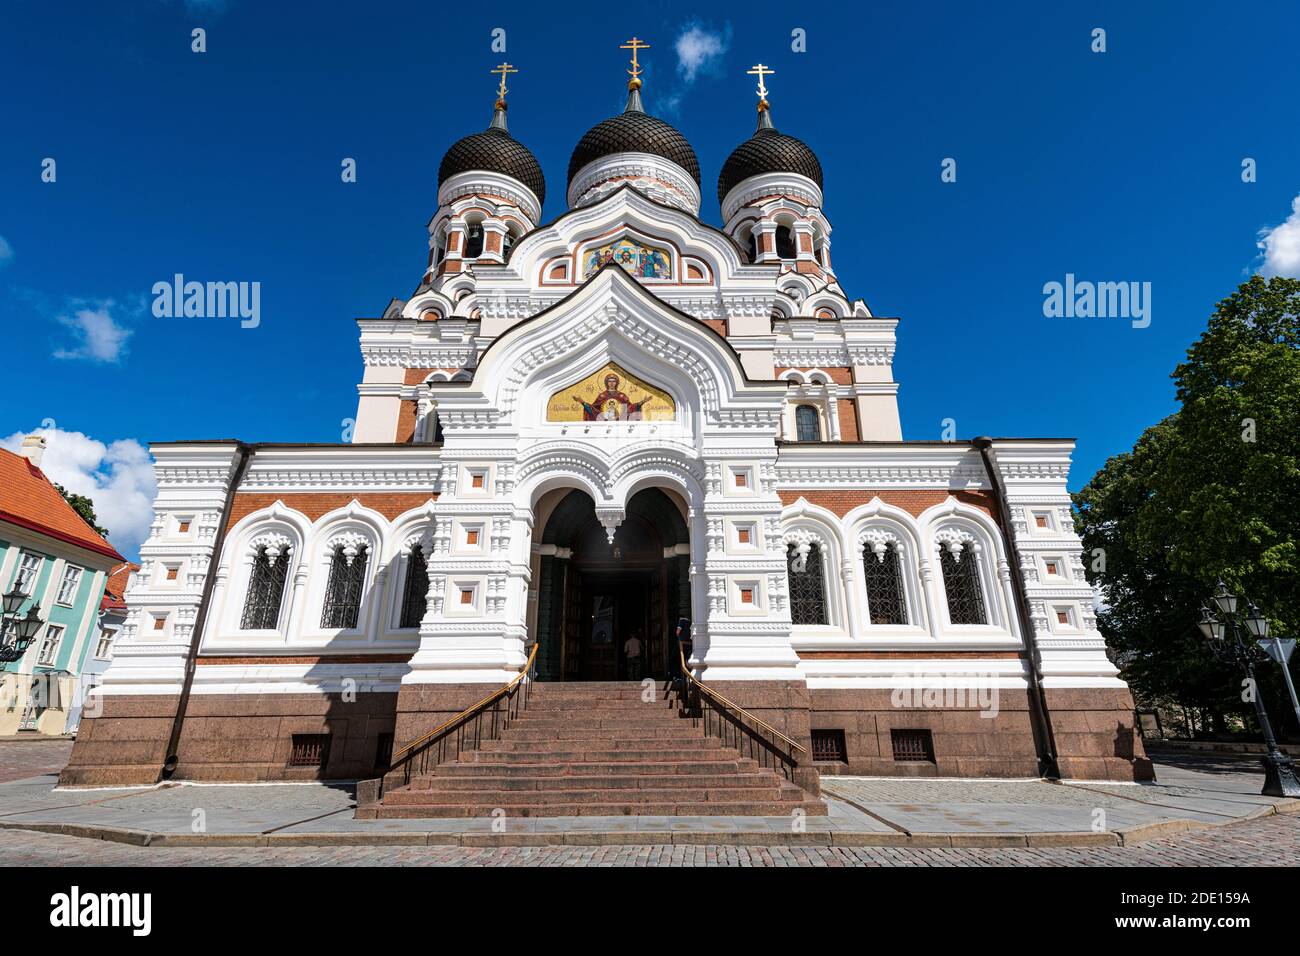 Alexander Nevsky Cathedral, Upper Town, UNESCO World Heritage Site, Tallinn, Estonia, Europe Stock Photo